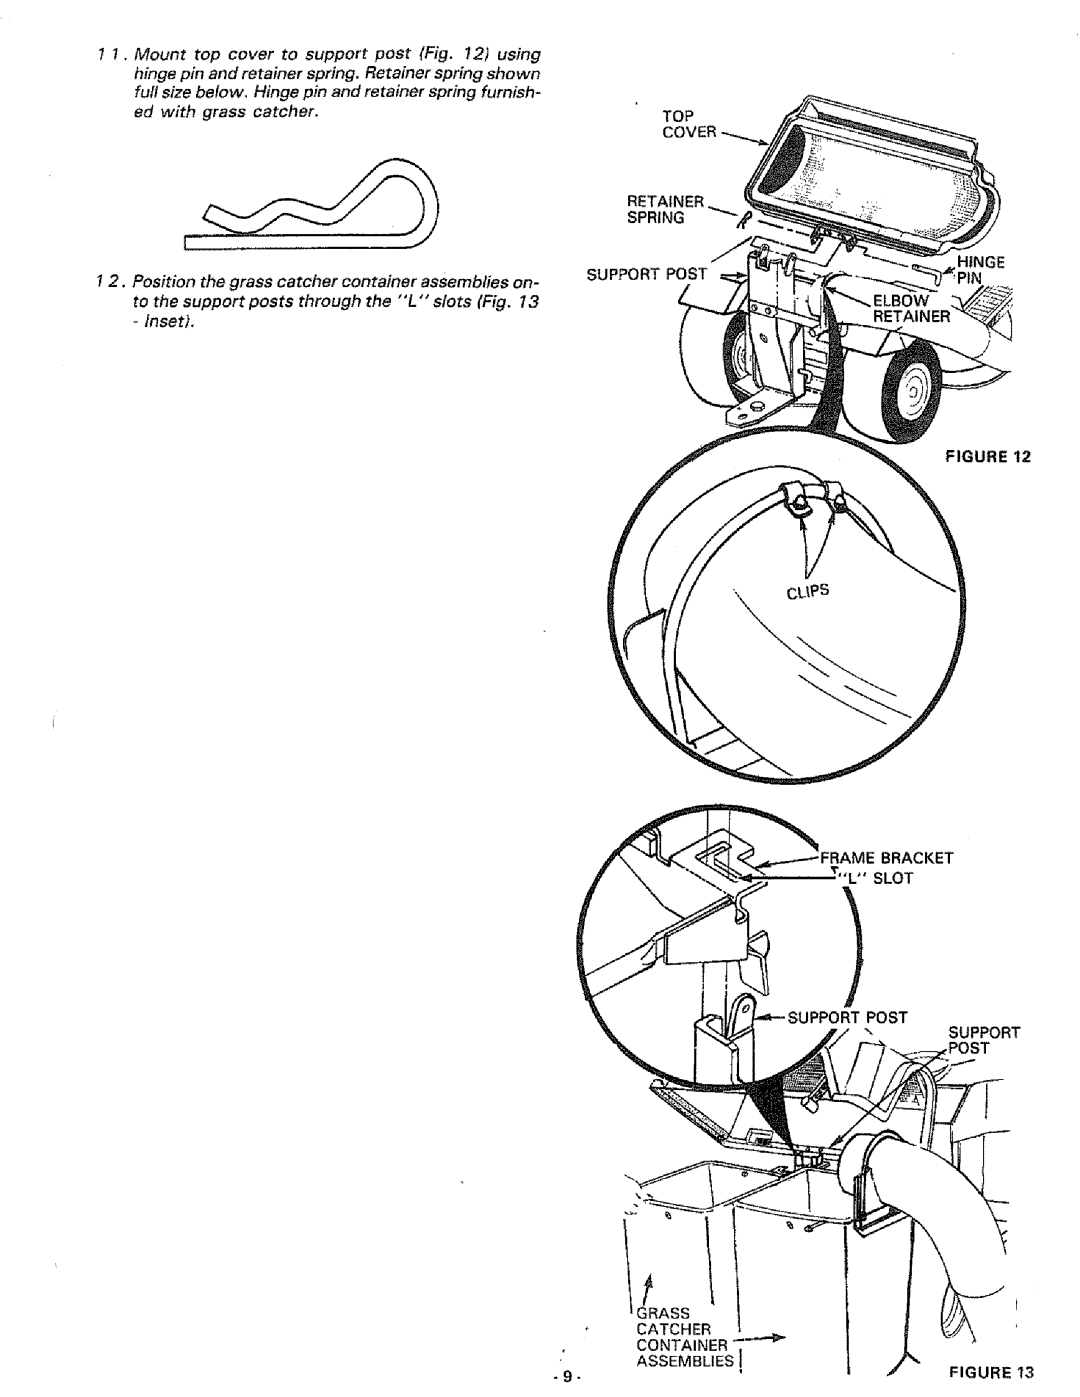 Sears 917.249391 manual Inset, Hinge Figure, rL SLOT, Post Support 